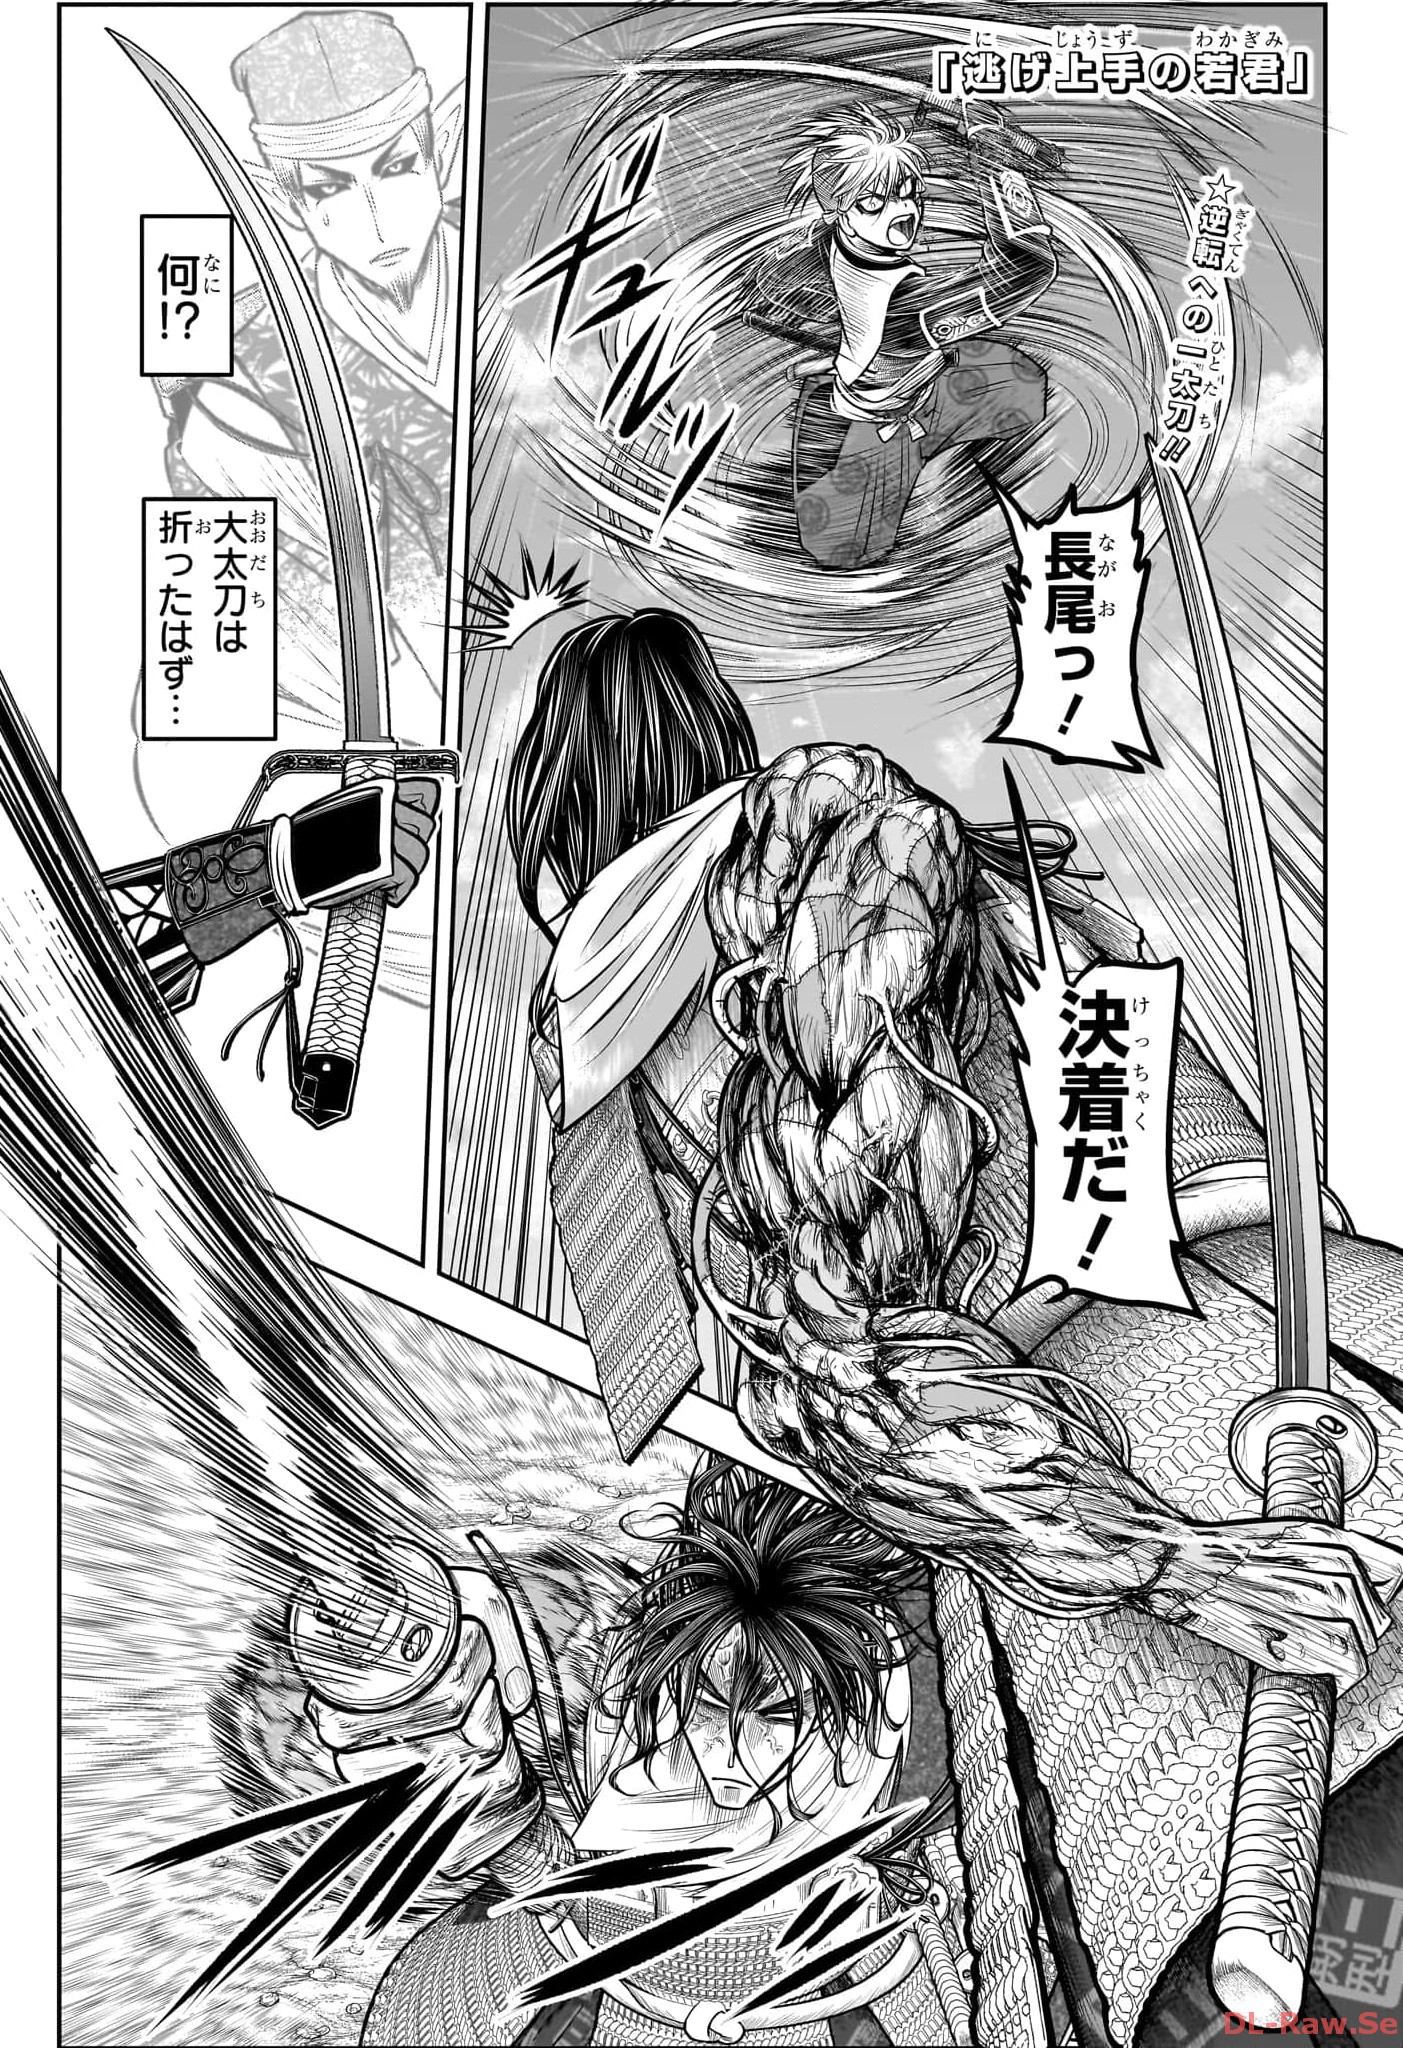 Nige Jouzu no Wakagimi - Chapter 140 - Page 1